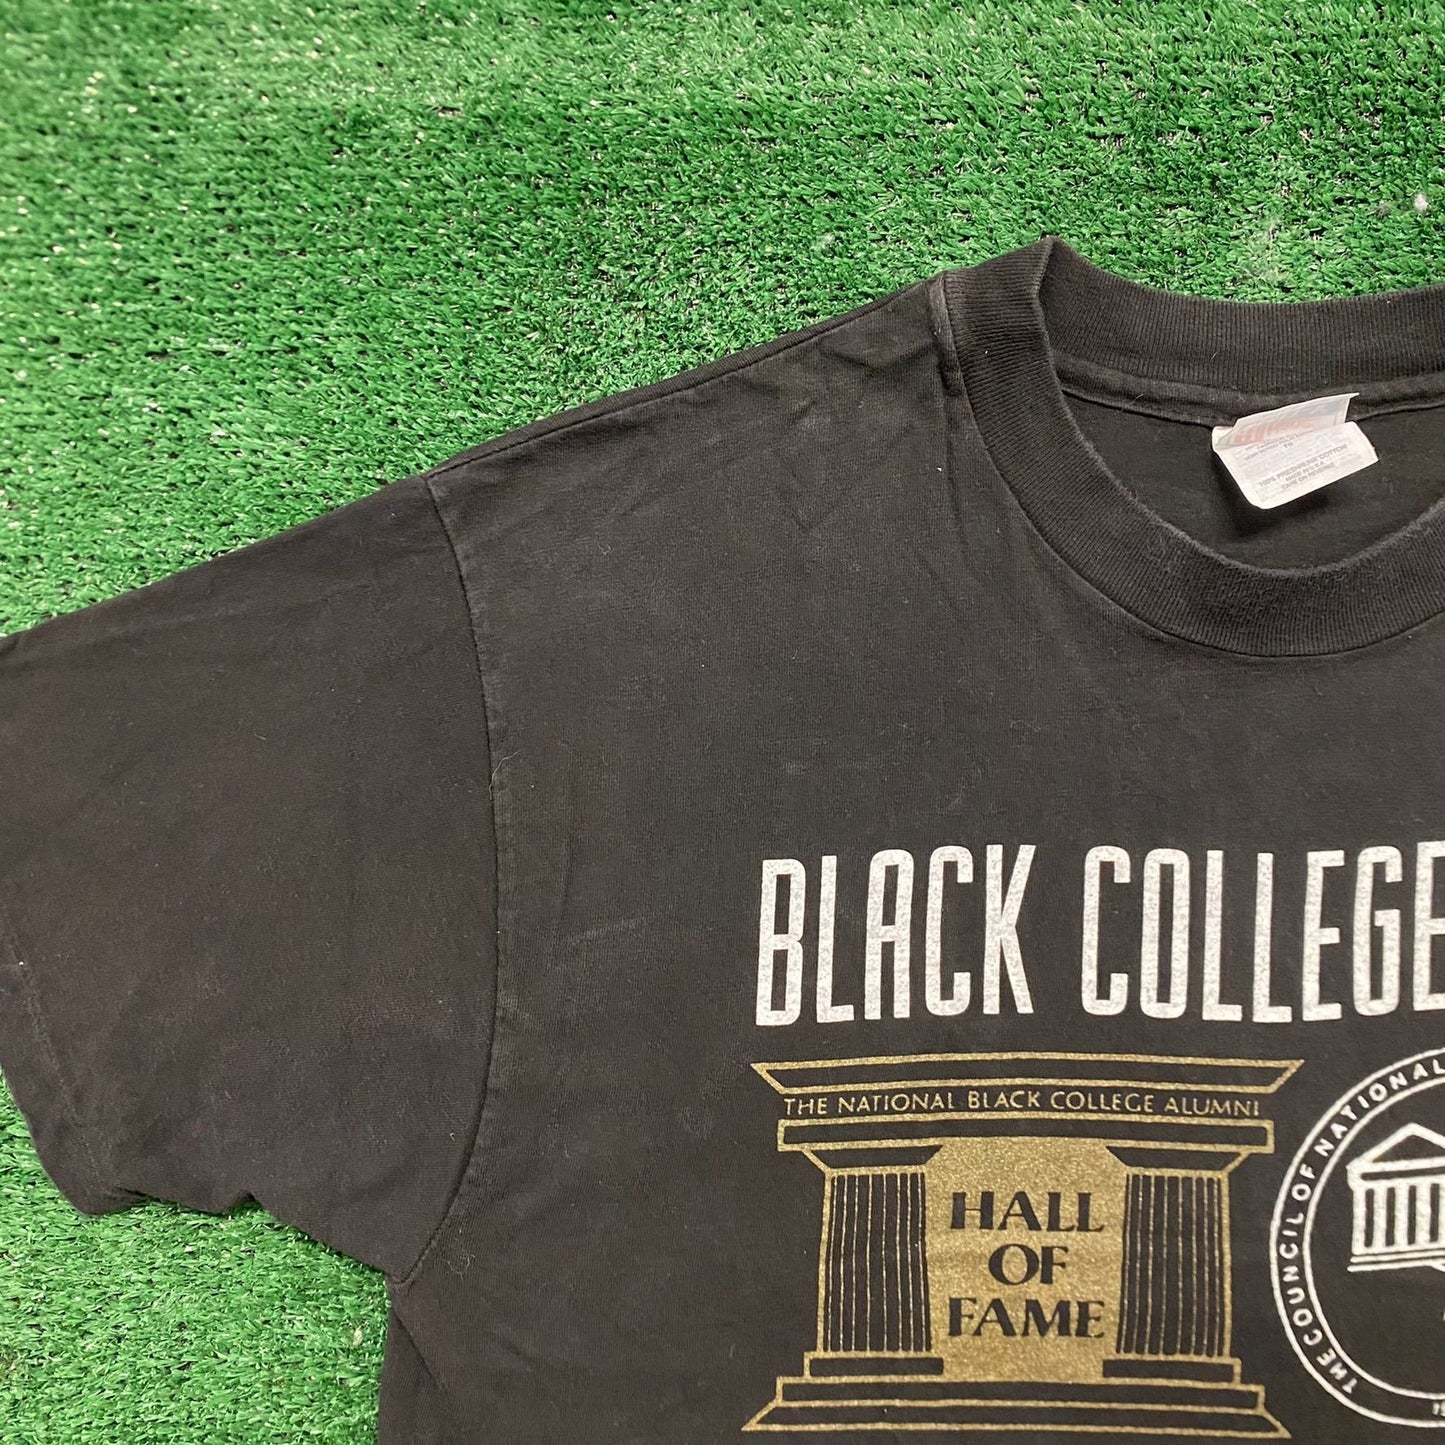 Vintage 90s Black College Alumni HBCU Single Stitch Tee